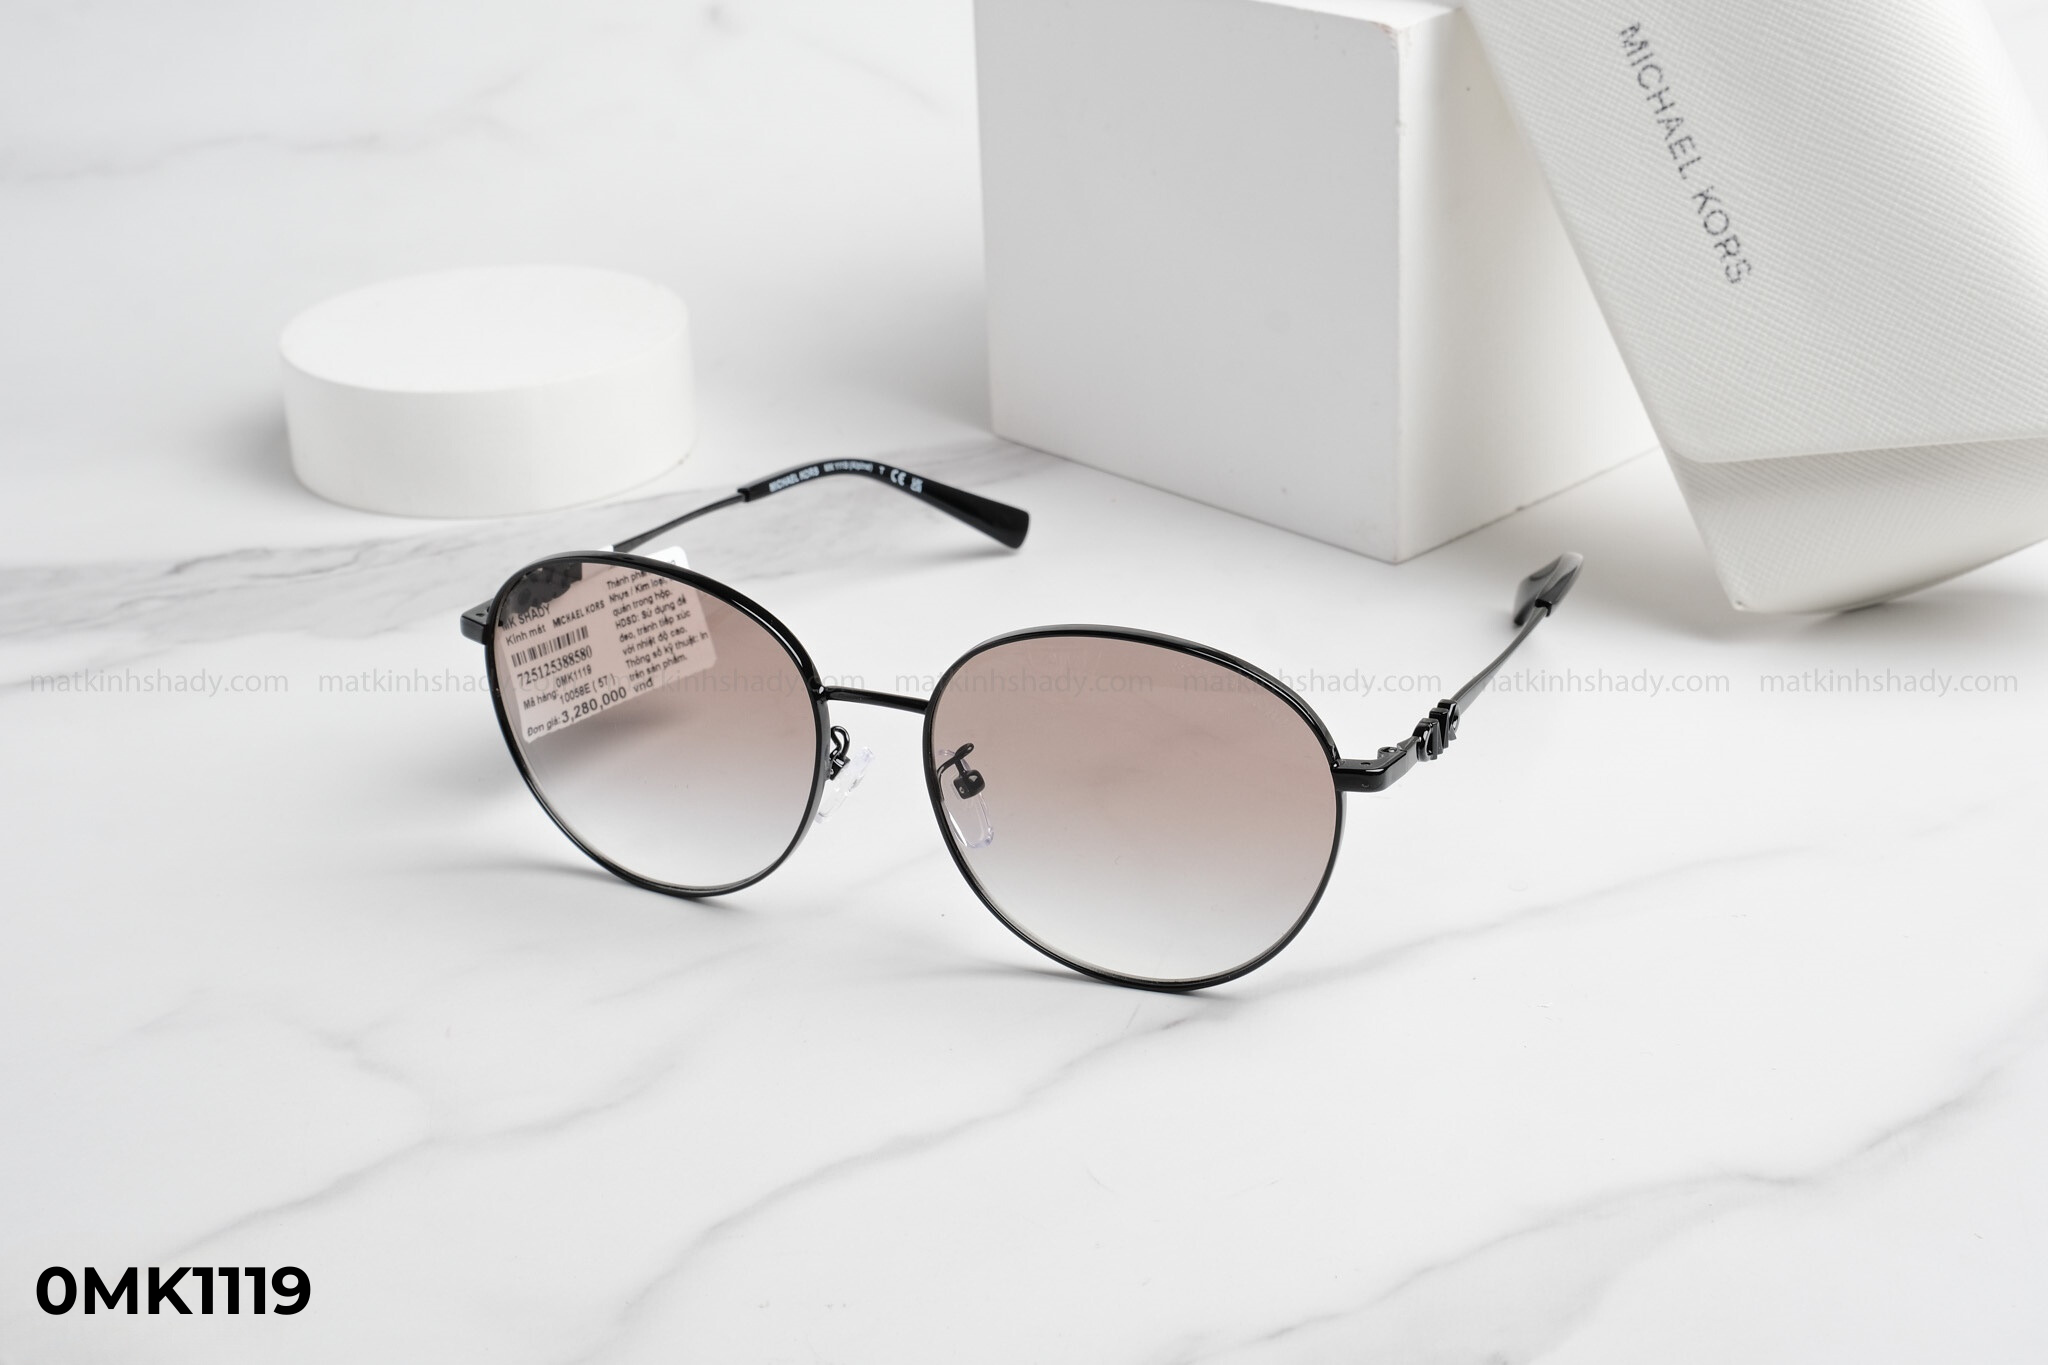  Michael Kors Eyewear - Sunglasses - 0MK1119 